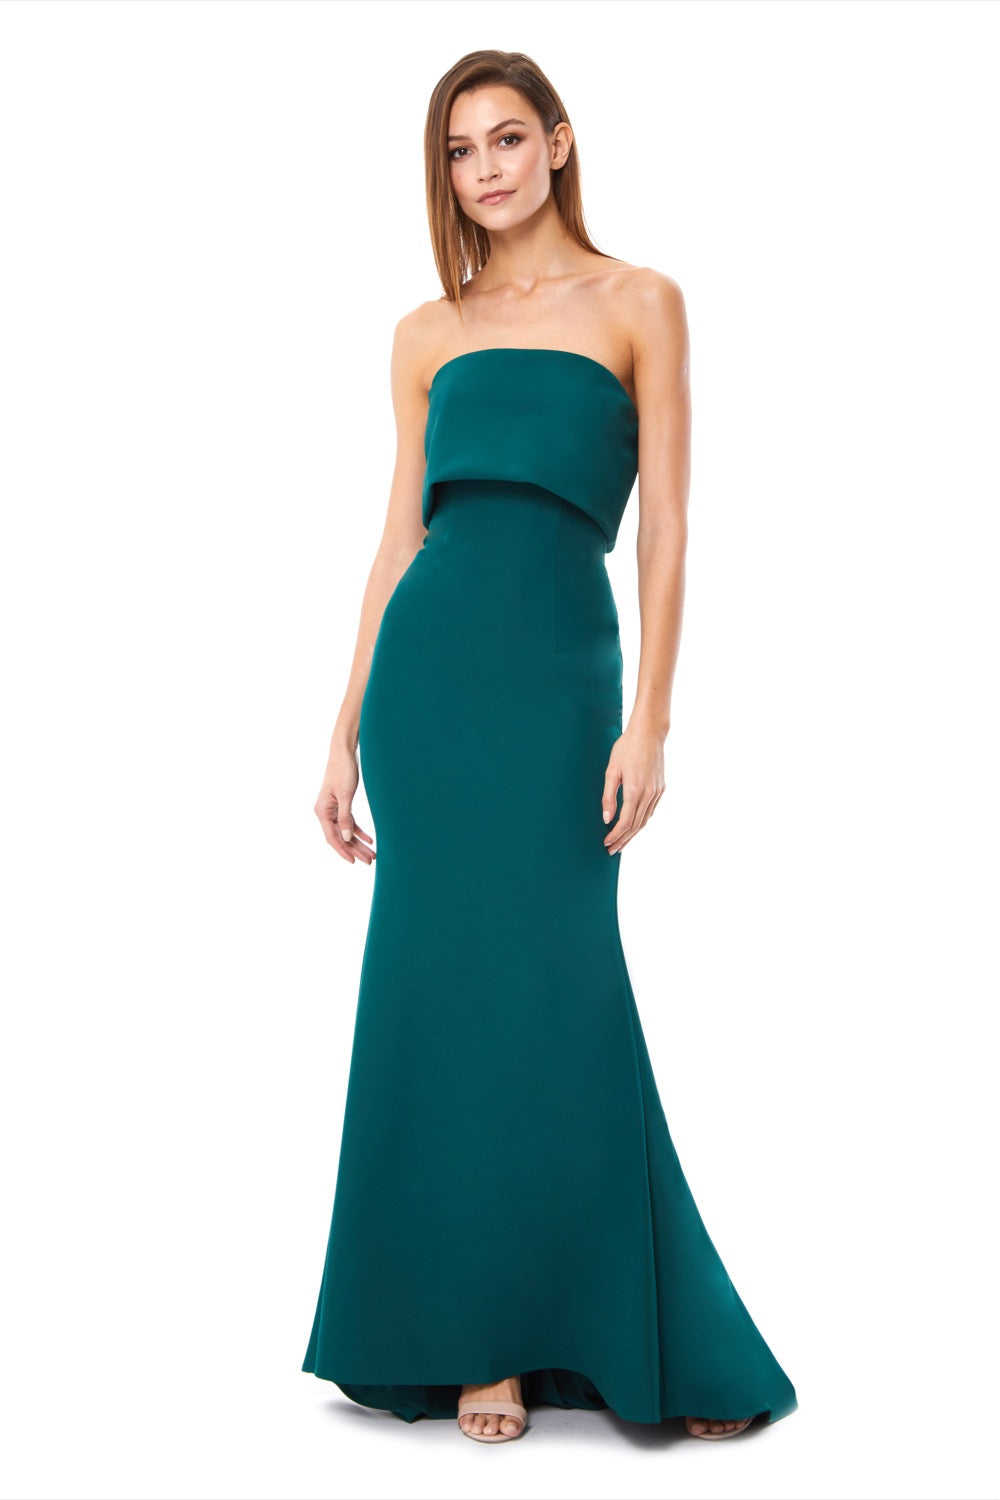 Blaze Strapless Maxi Dress With Overlay, UK 18 / US 14 / EU 46 / Dark Green